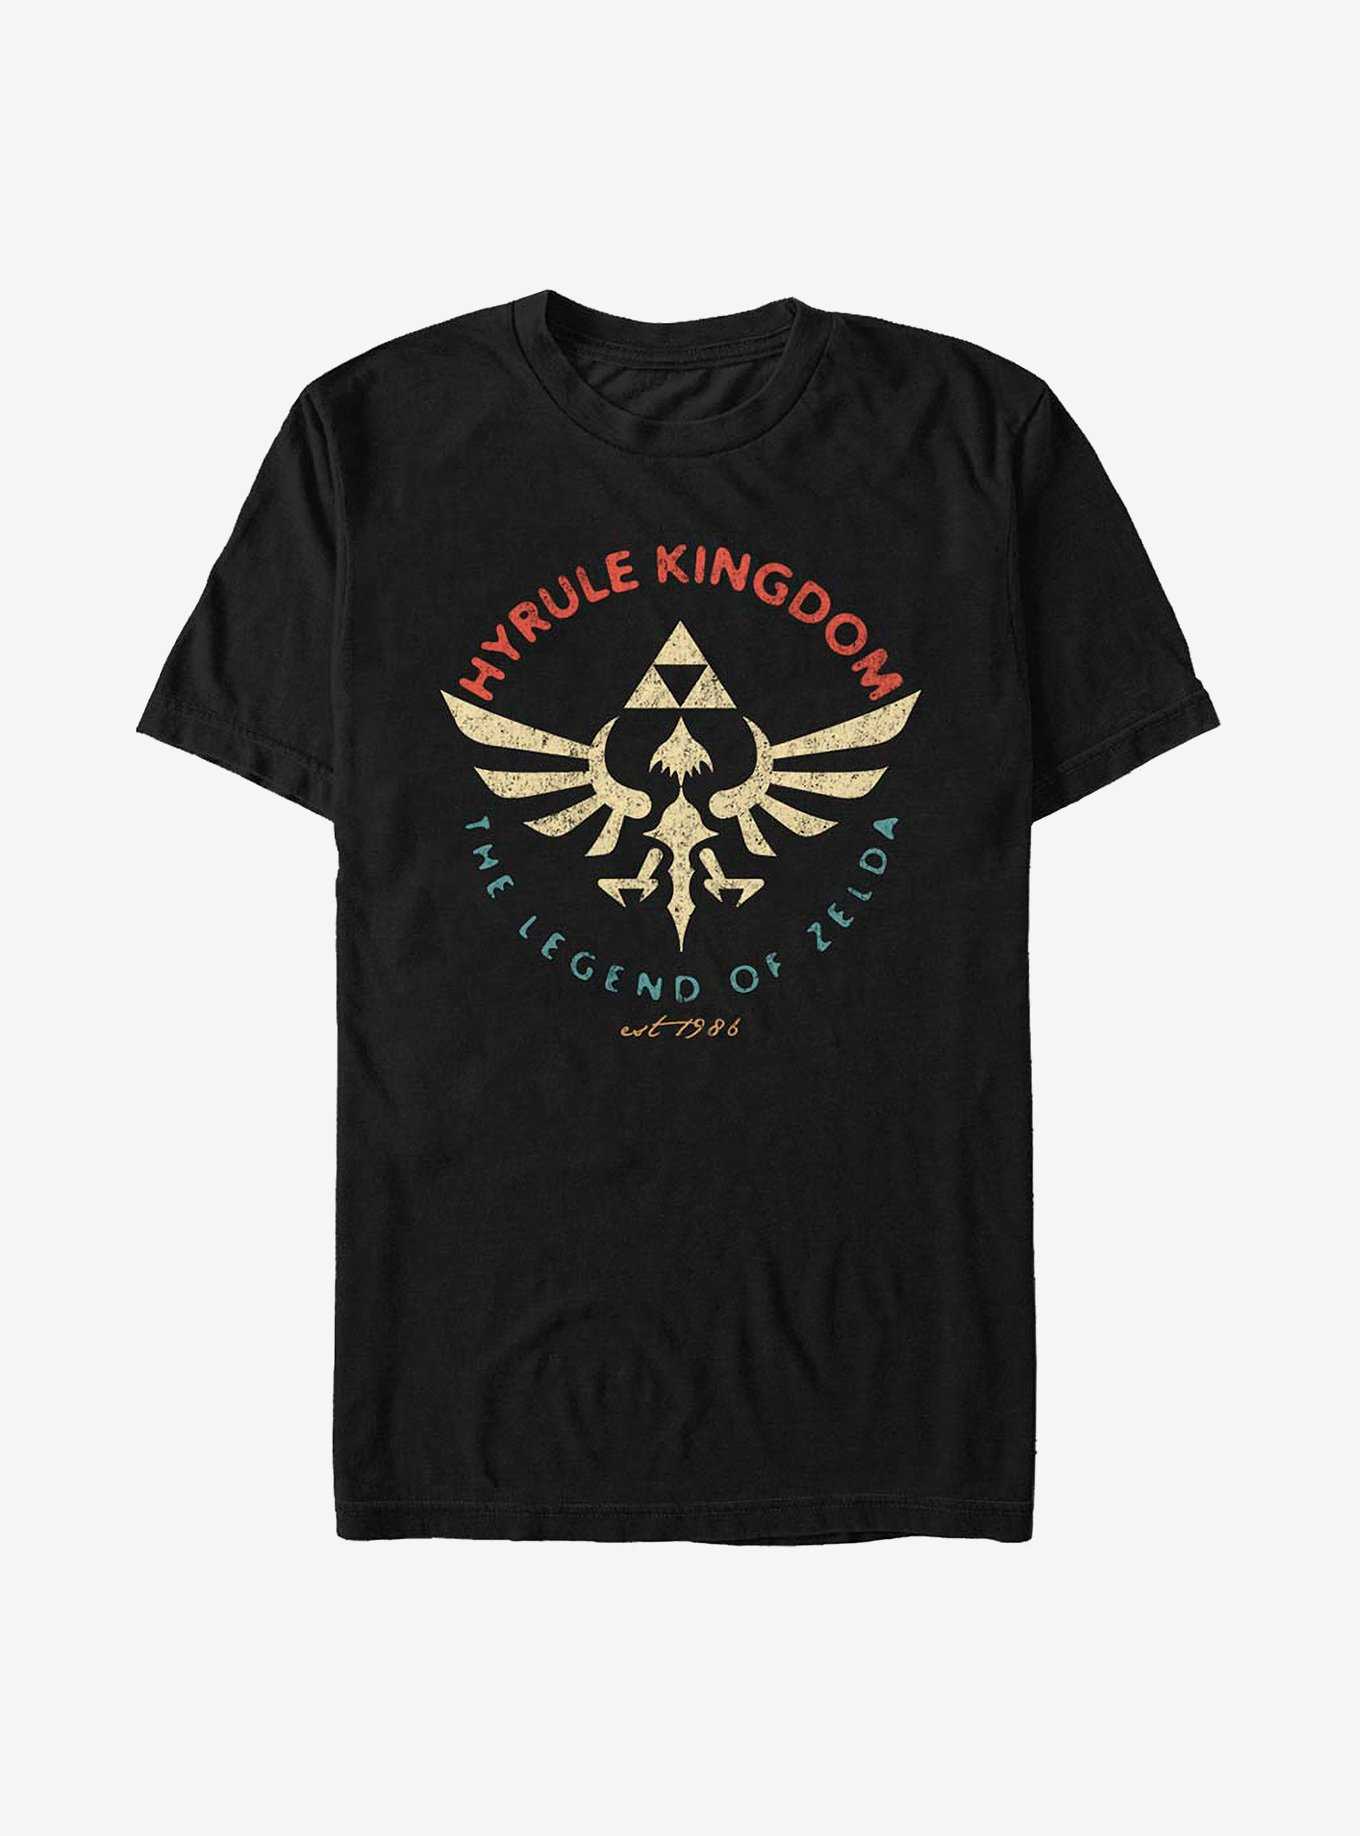 Nintendo Zelda Fly High T-Shirt, , hi-res